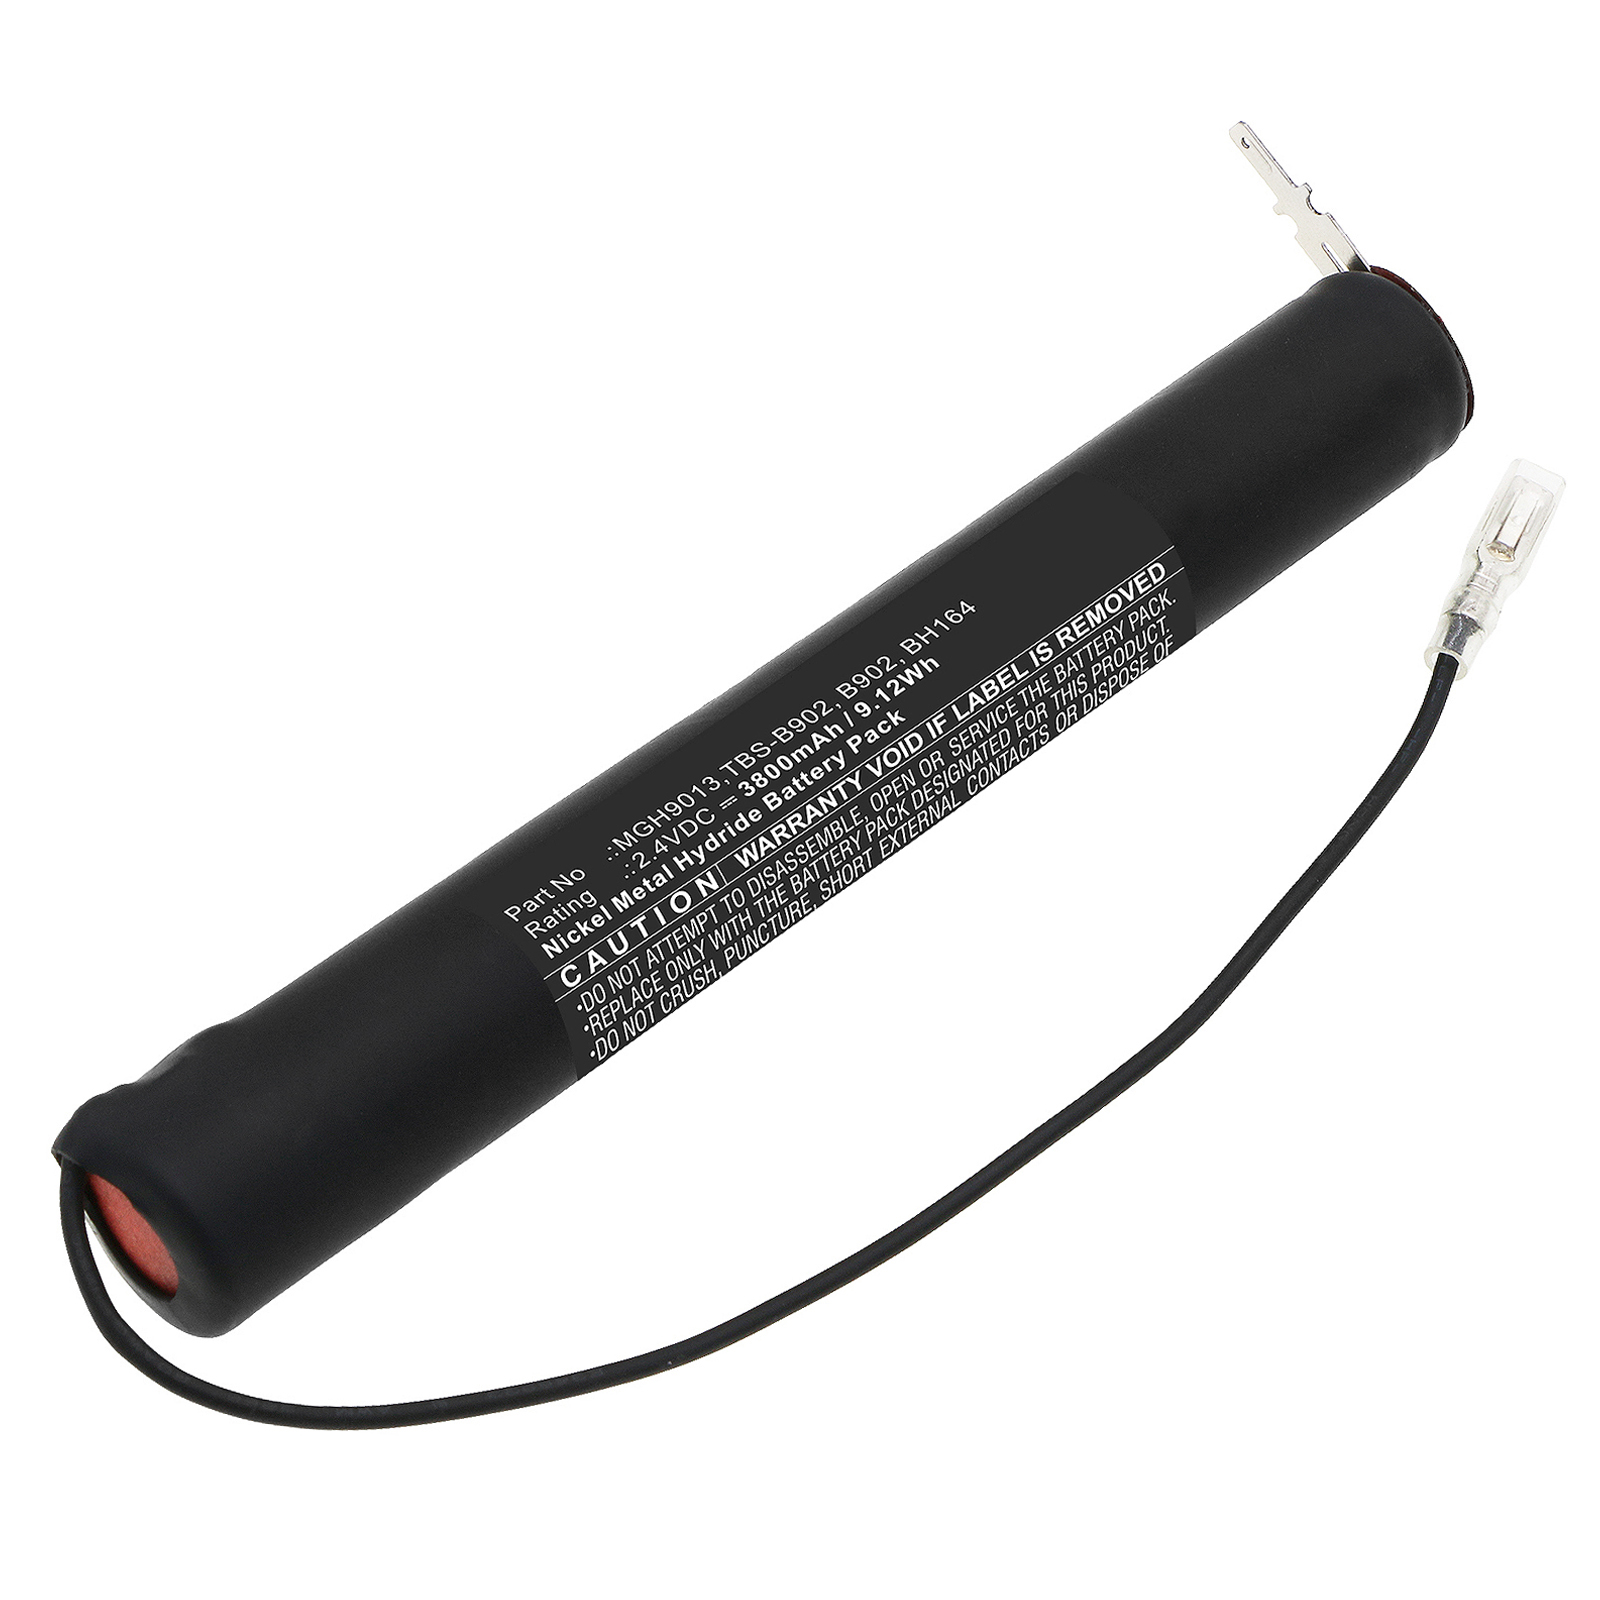 Synergy Digital Emergency Lighting Battery Compatible with Mackwell TBS-B902 Emergency Lighting Battery (Ni-MH, 2.4V, 3800mAh)